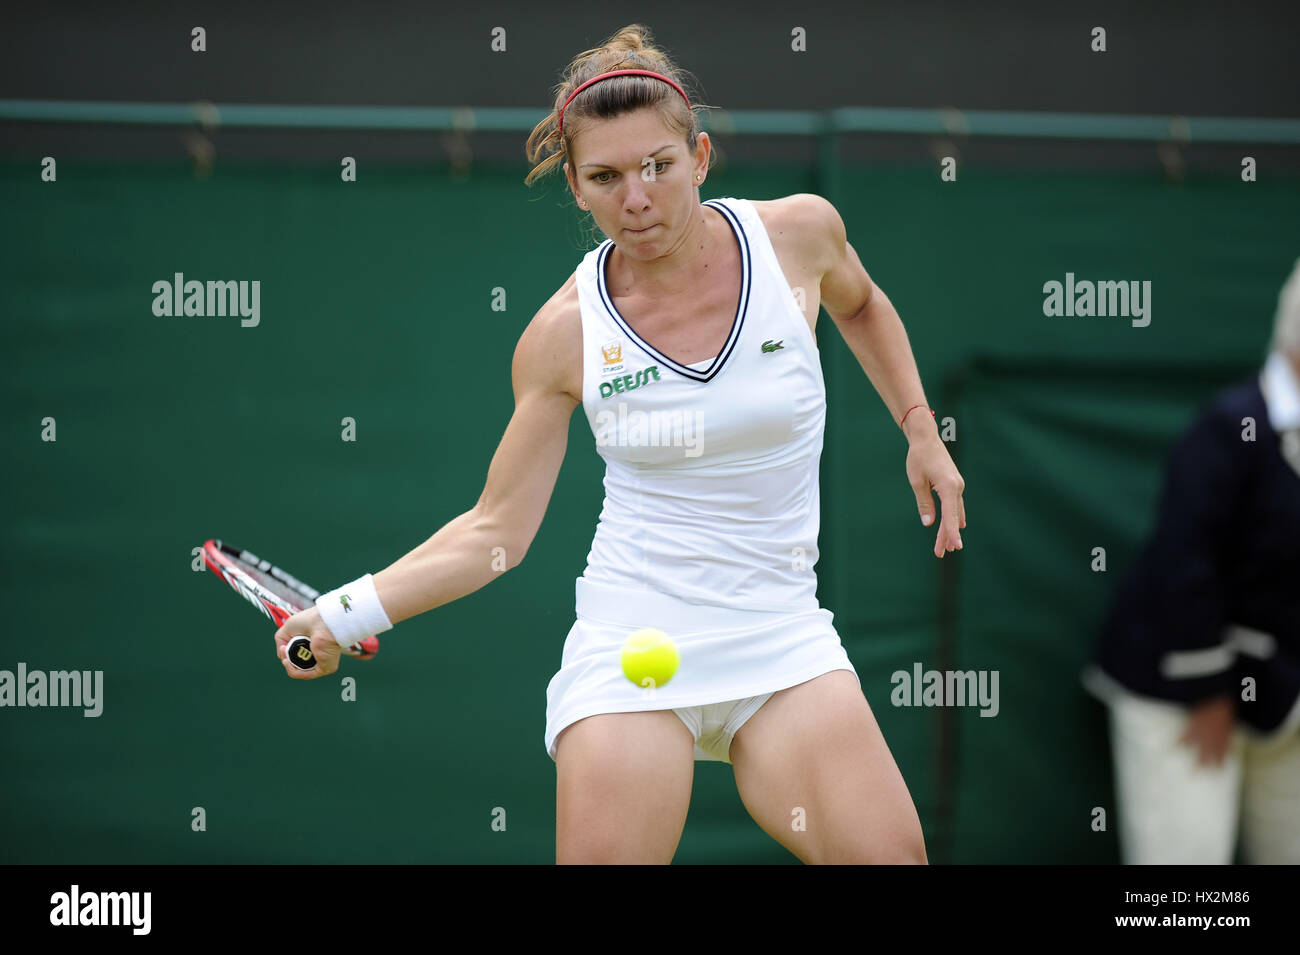 Simona halep tennis hi-res stock photography and images - Alamy